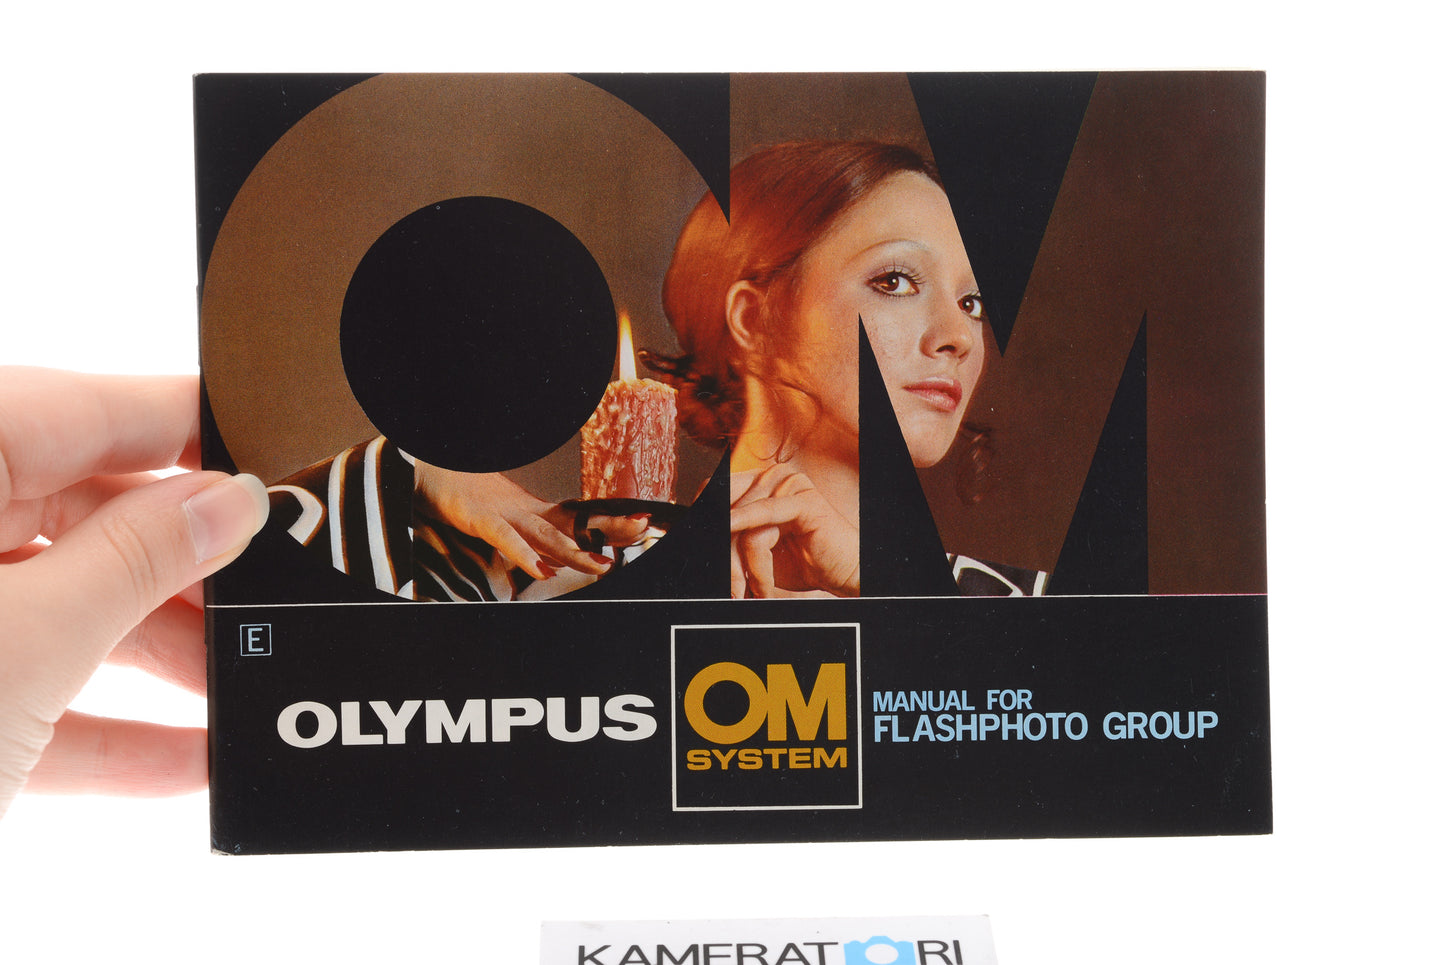 Olympus OM Flashphoto Group Manual